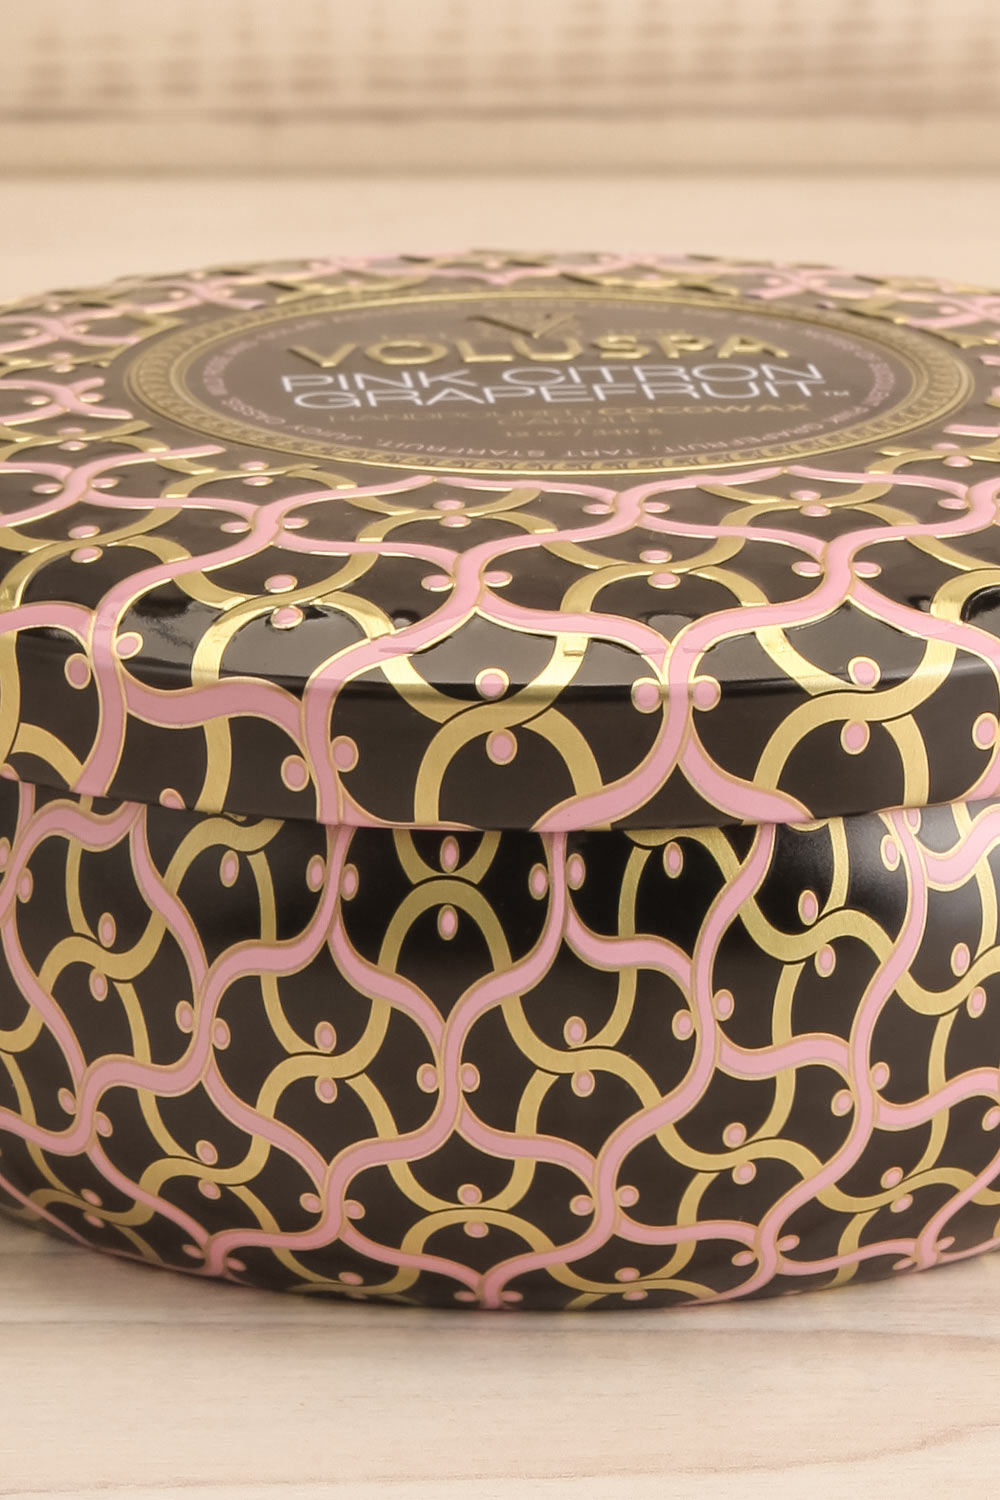 Pink Citron Grapefruit Tin Bowl Candle by Voluspa | Maison garçonne close-up